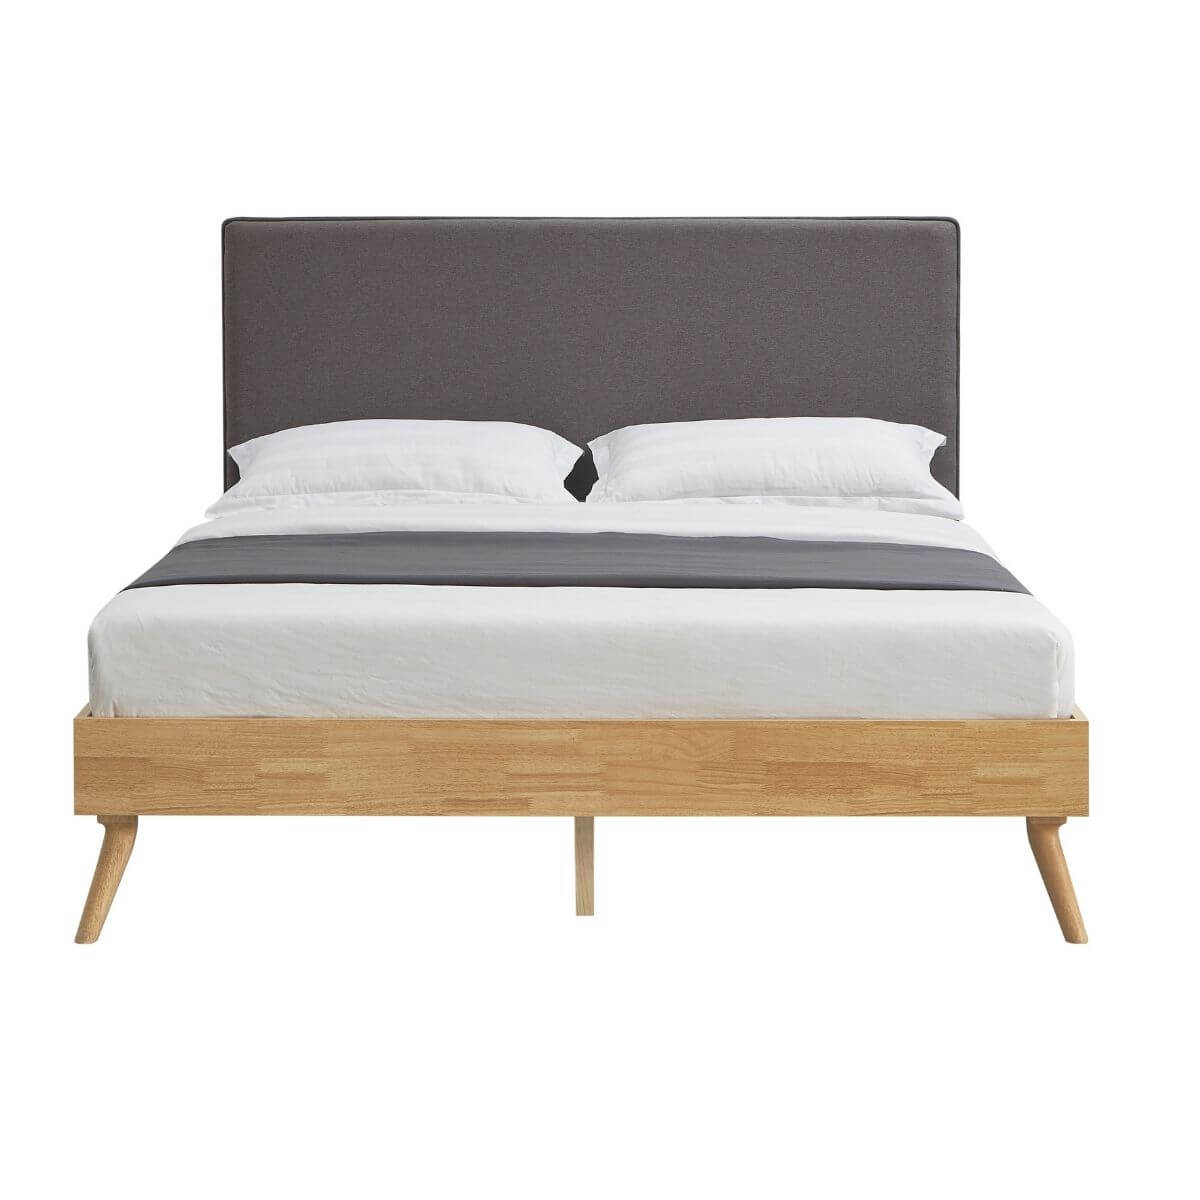 Natural Oak Ensemble Bed Frame Wooden Slat Fabric Headboard King-Upinteriors